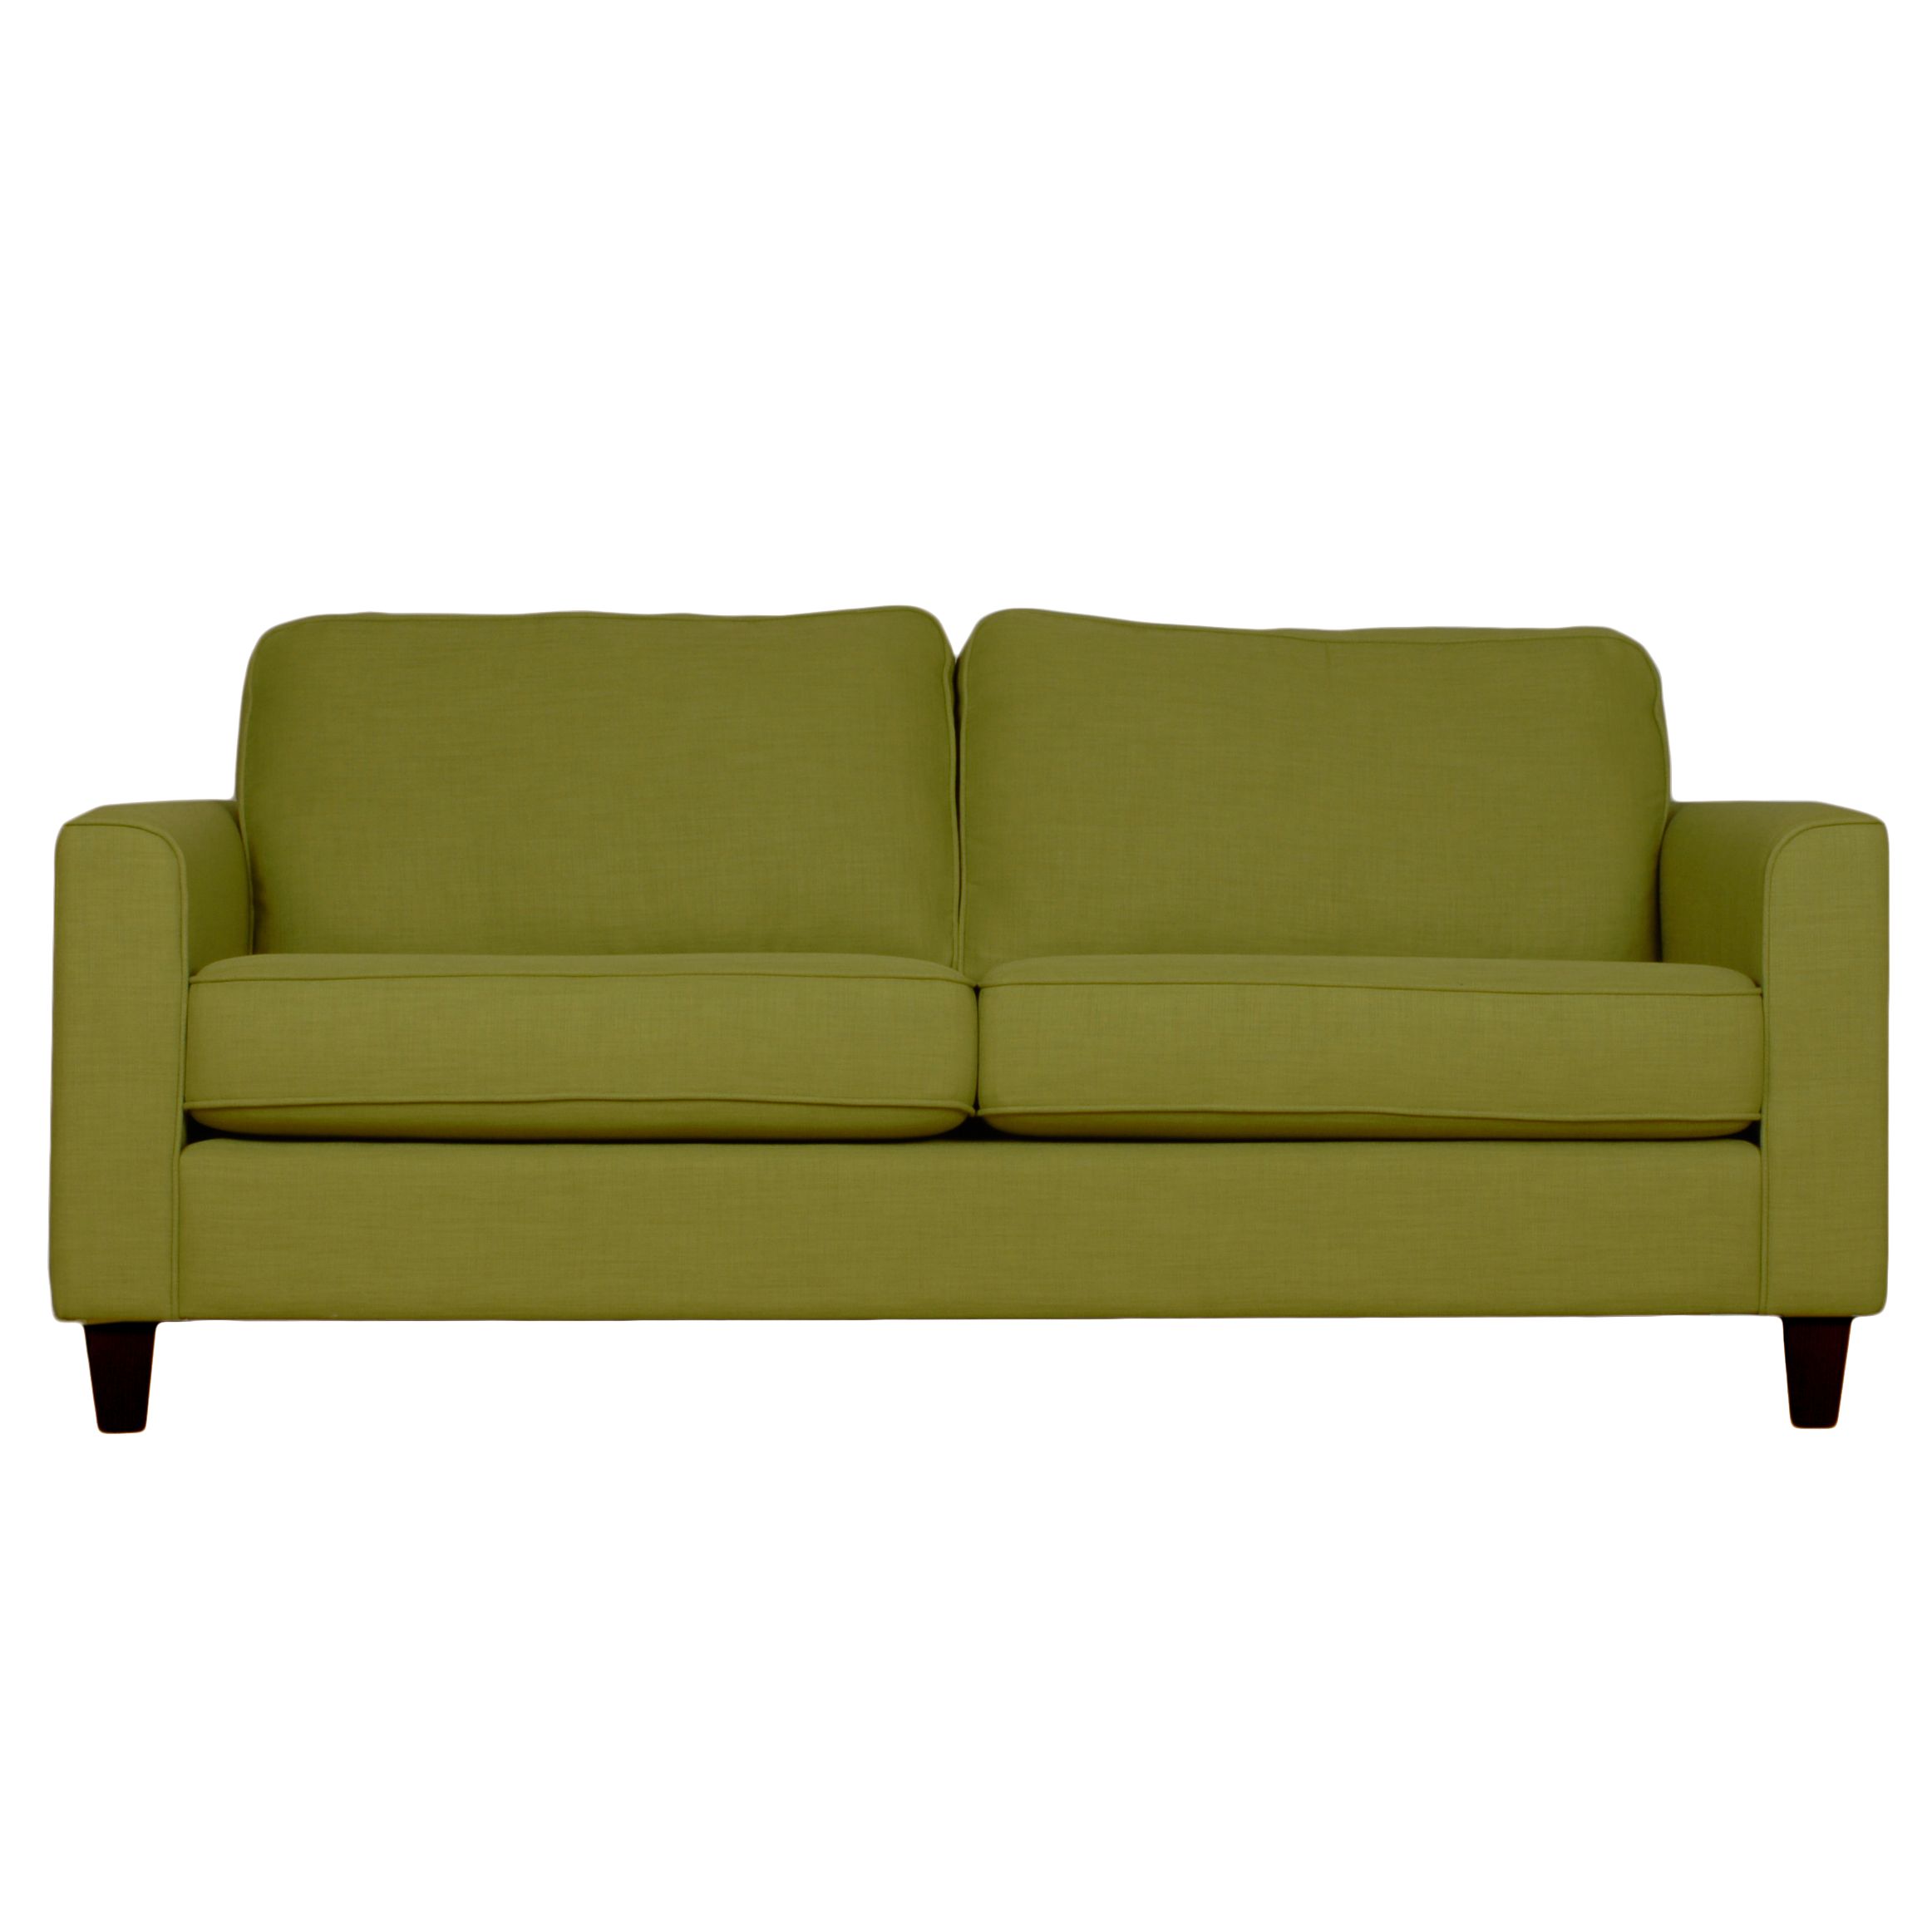 John Lewis Portia Medium Sofa, Olive / Dark Leg